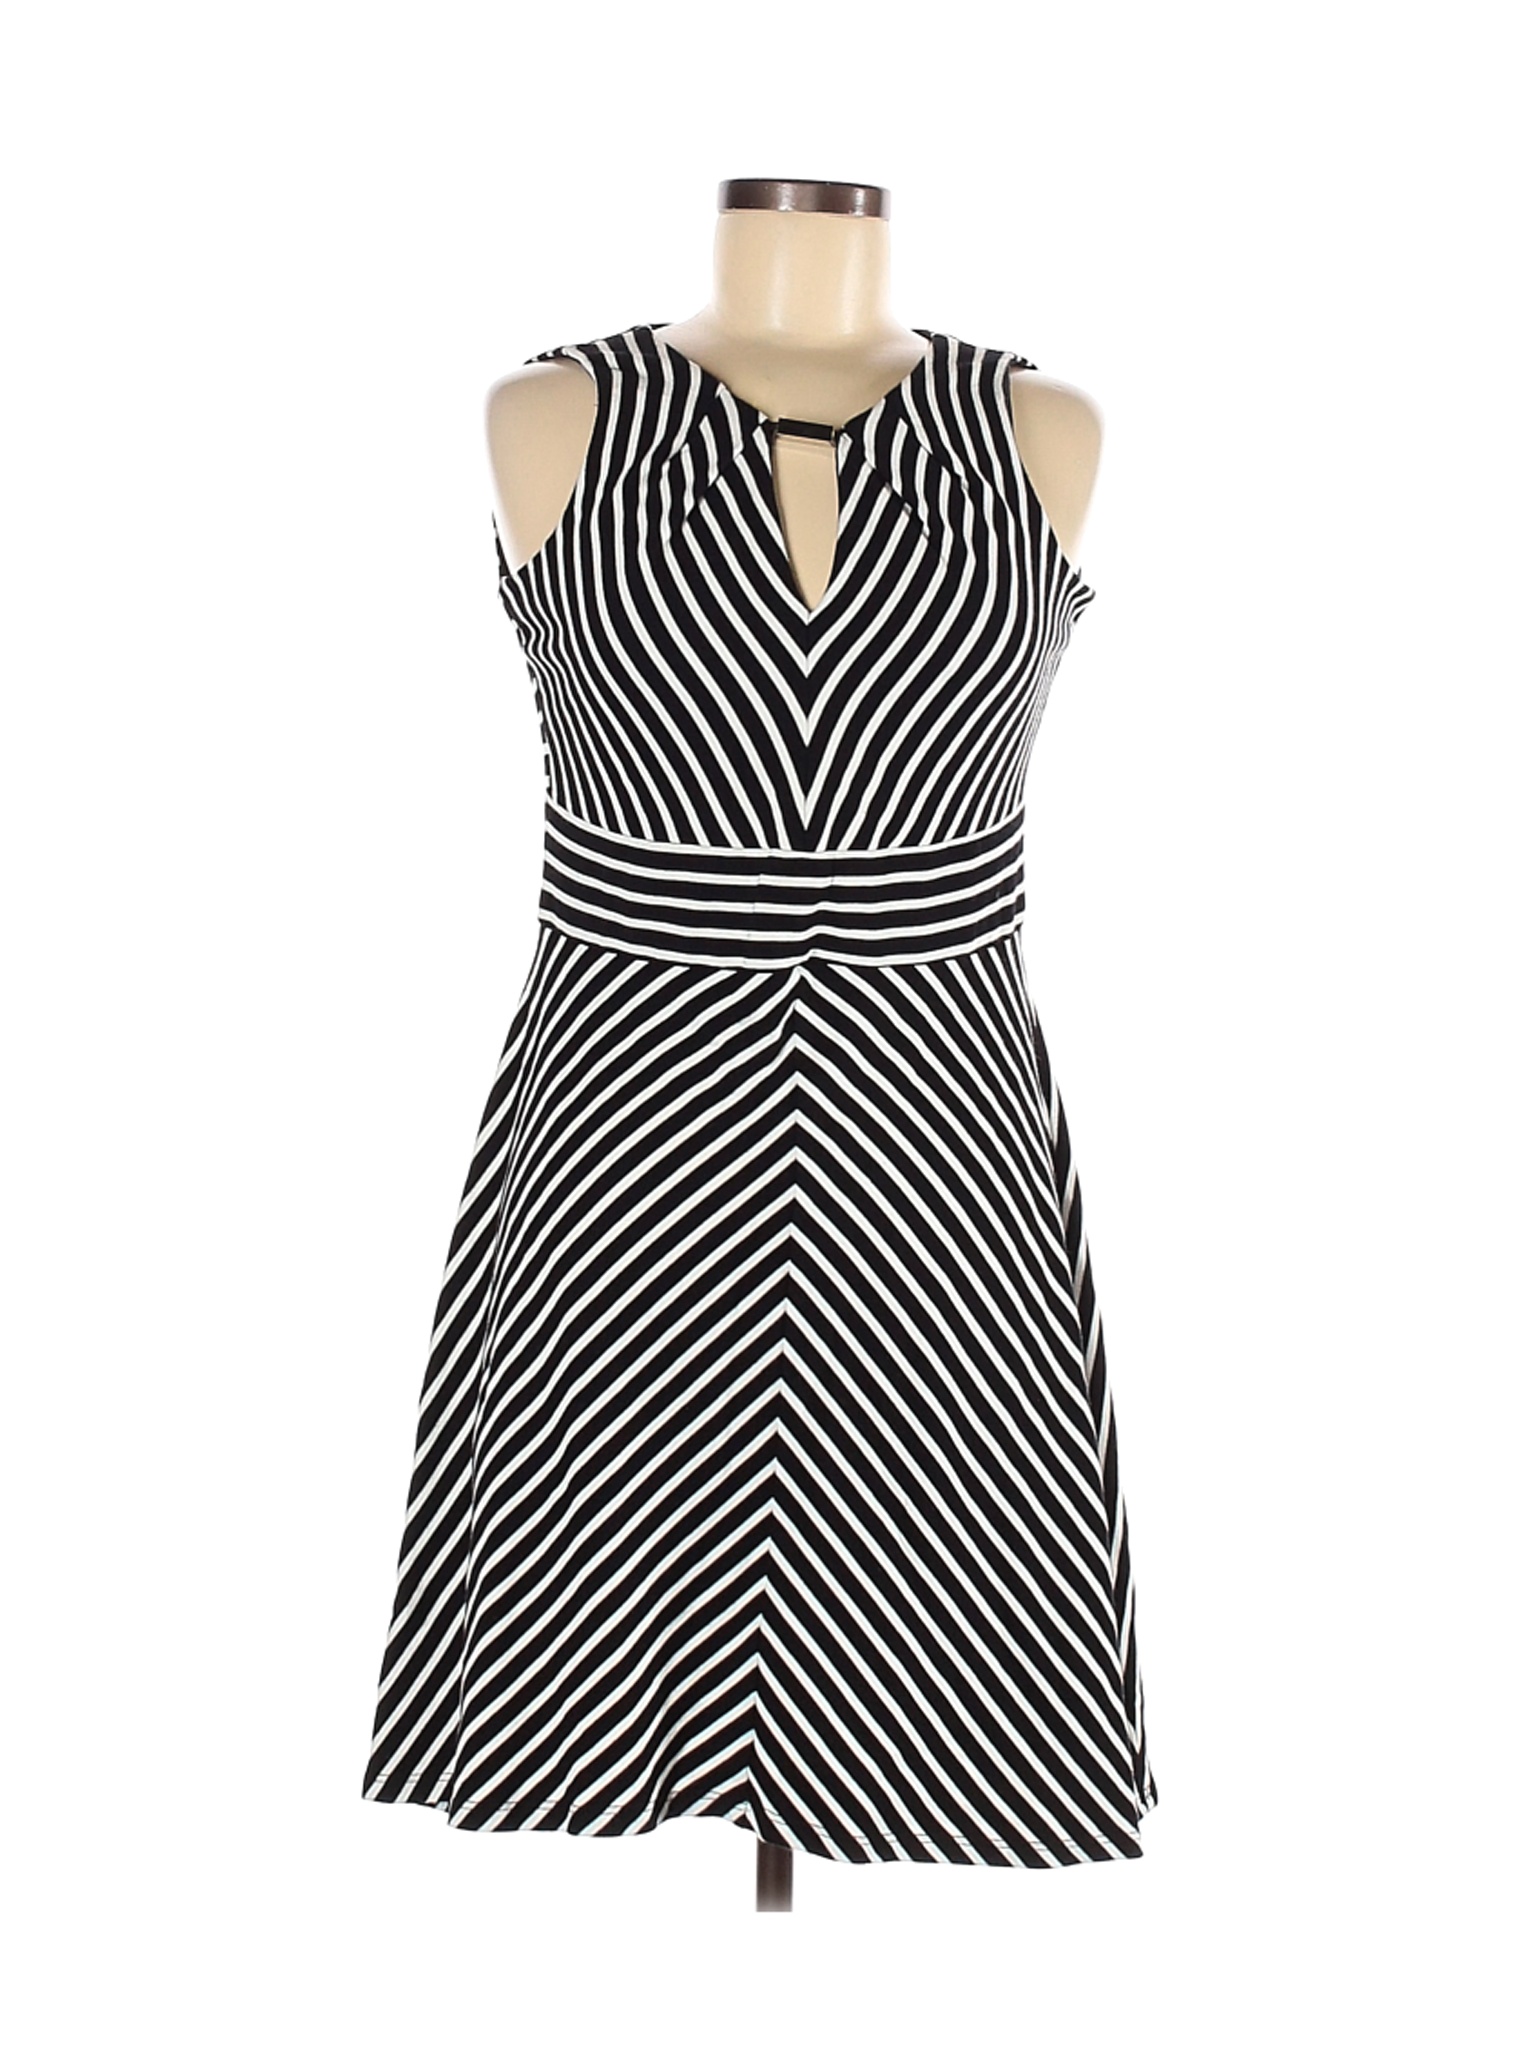 White House Black Market Women Black Casual Dress 6 | eBay